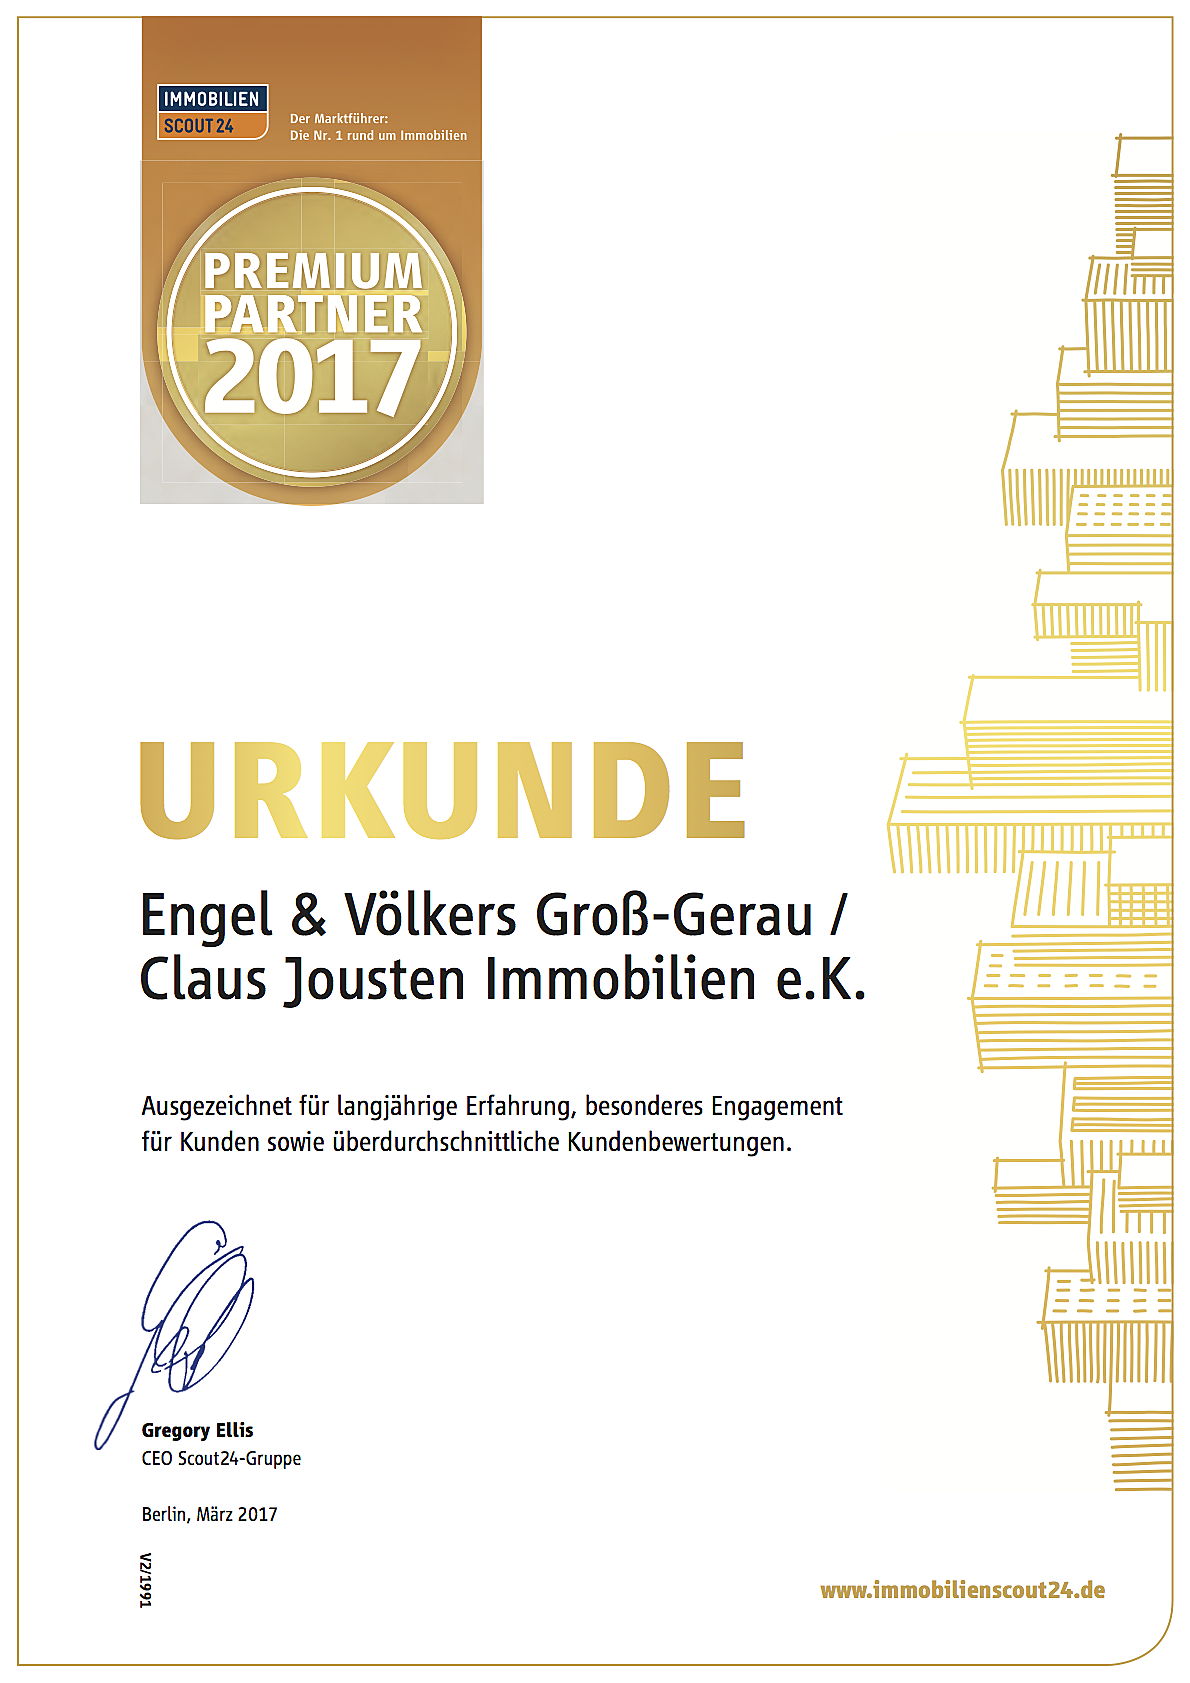  Groß-Gerau
- Urkunde Premiumpartner 2017